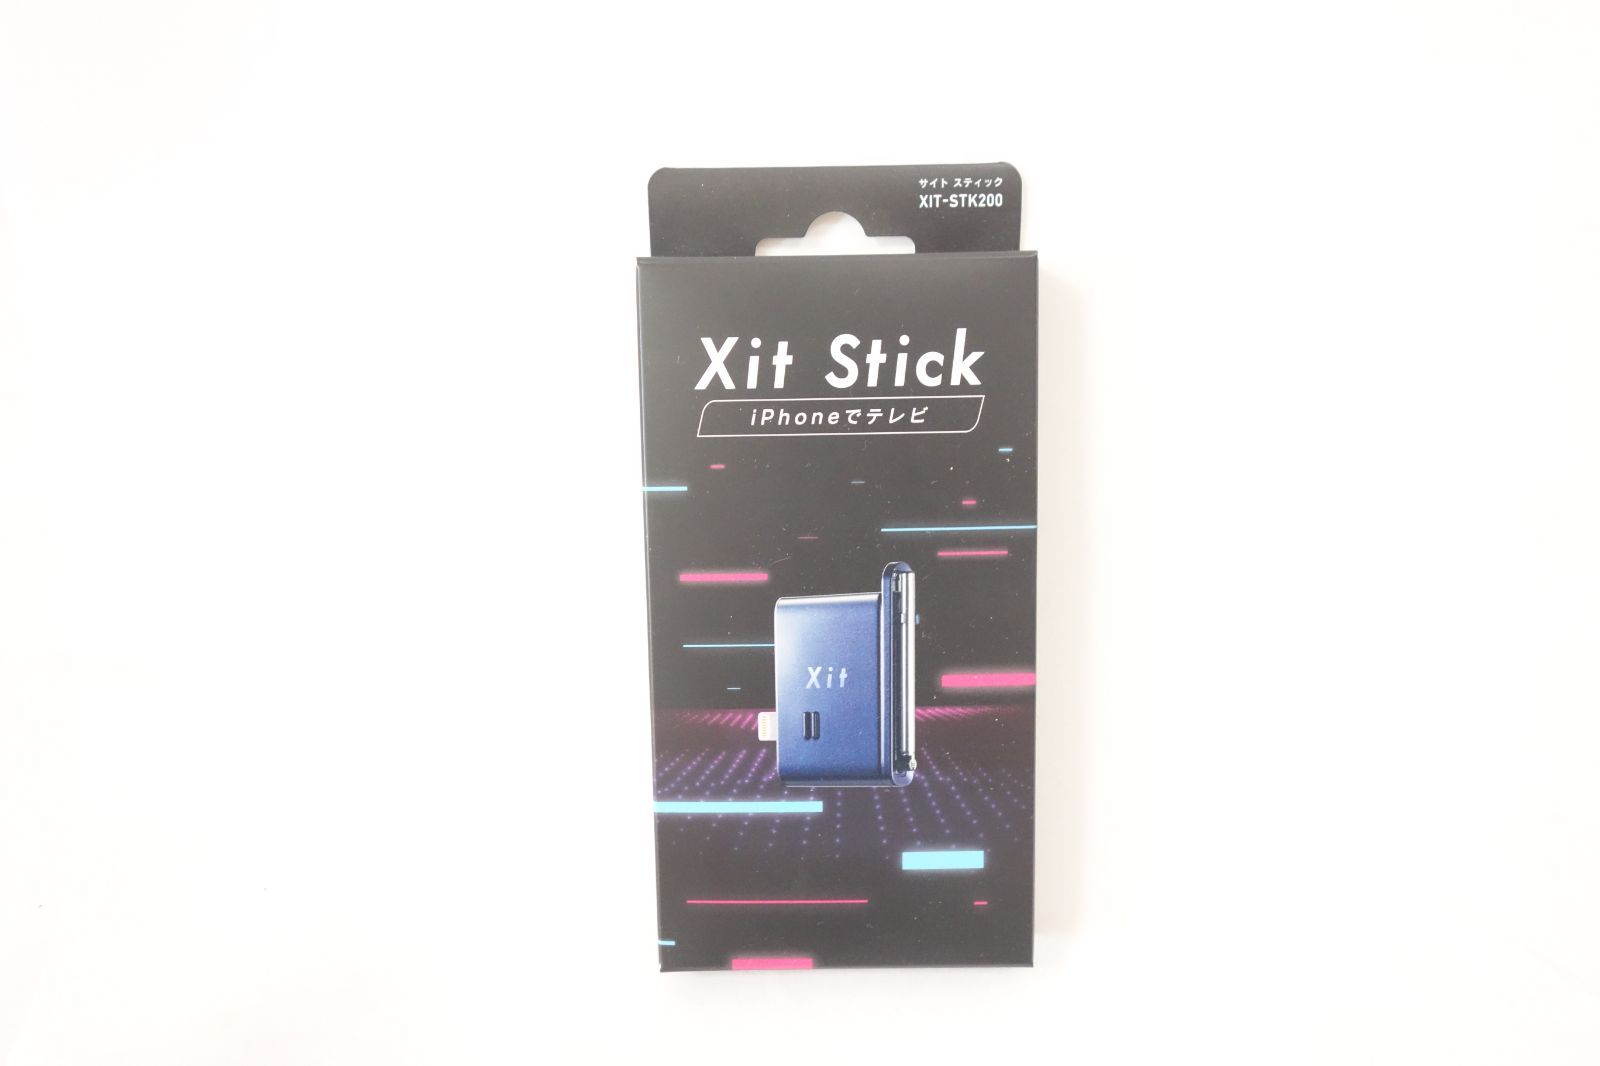 Pixela ピクセラ テレビチューナー Xit Stick サイト スティック XIT